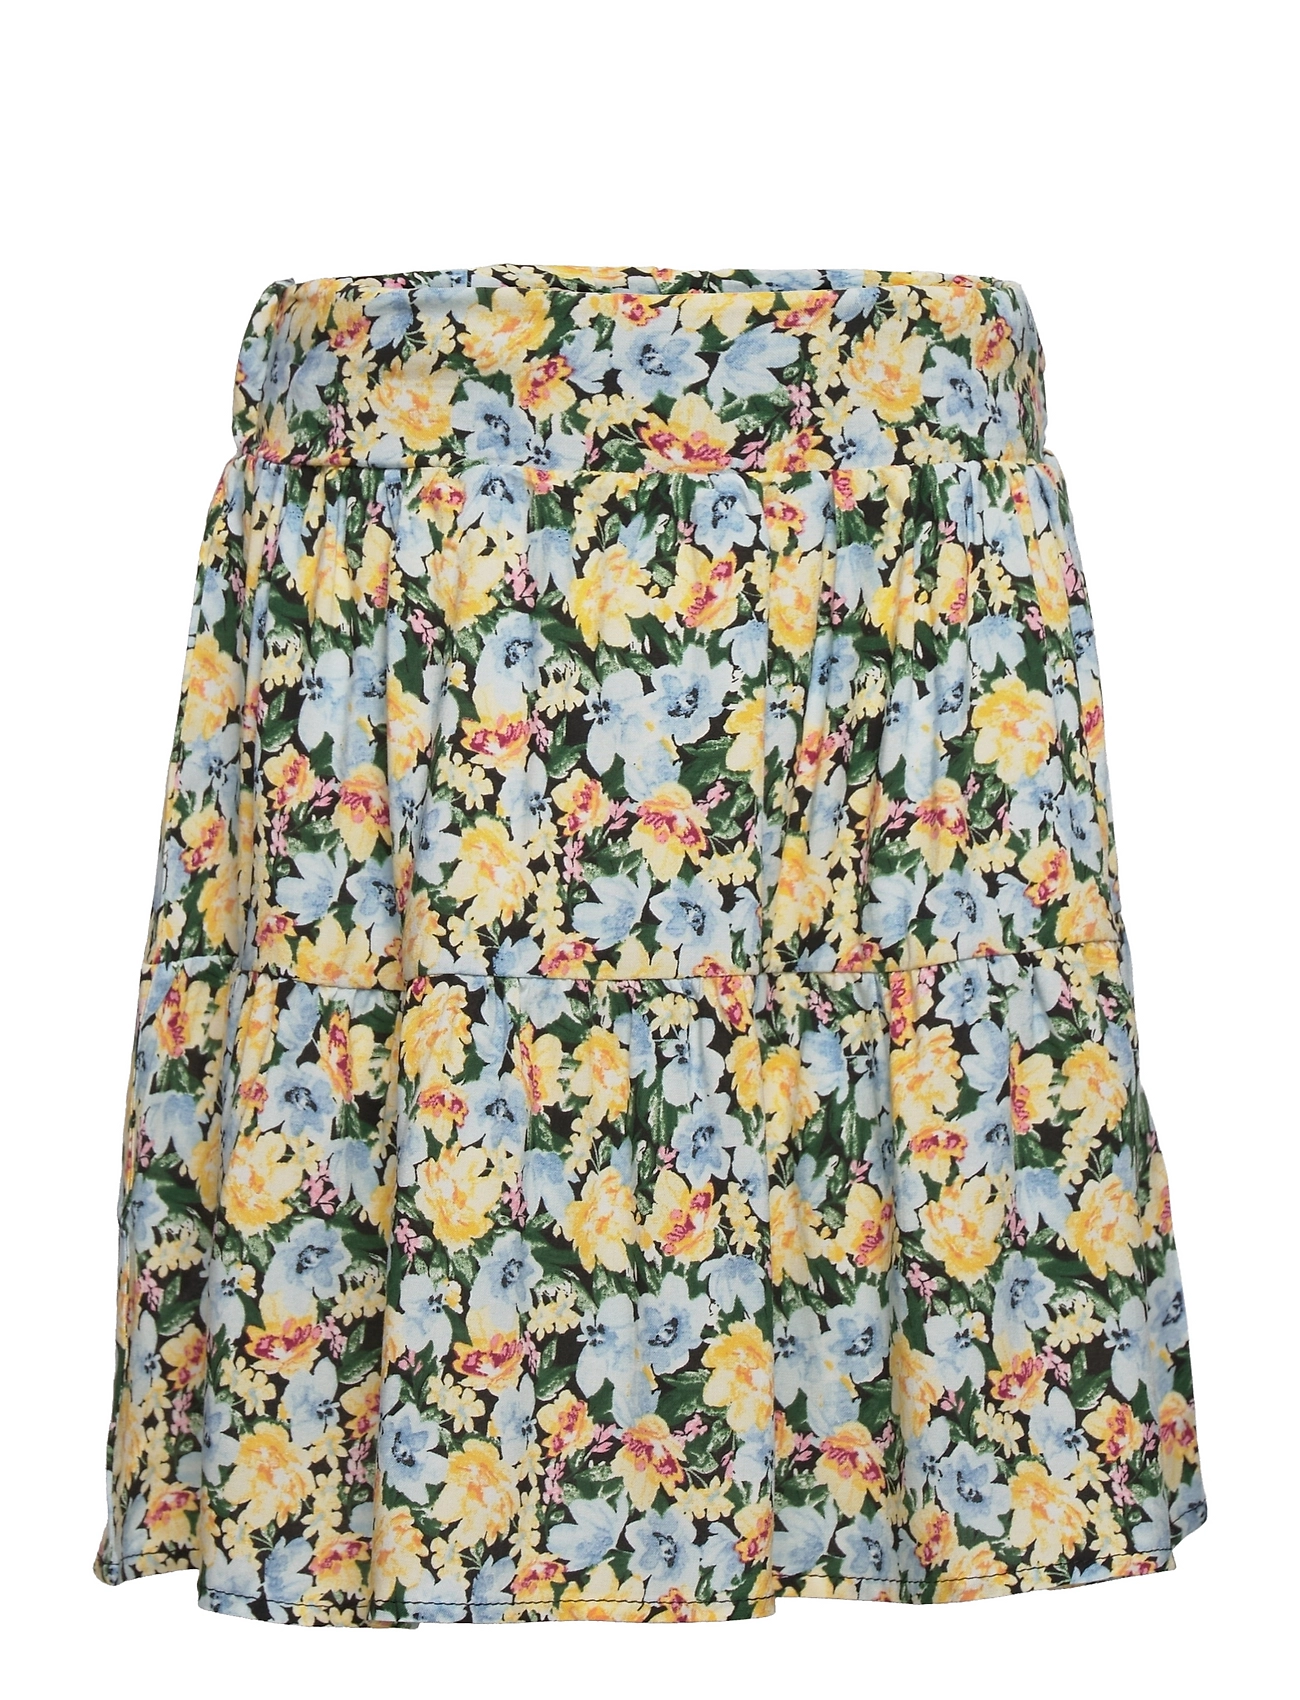 Nkfdunic Skirt Dresses & Skirts Skirts Short Skirts Multi/patterned Name It